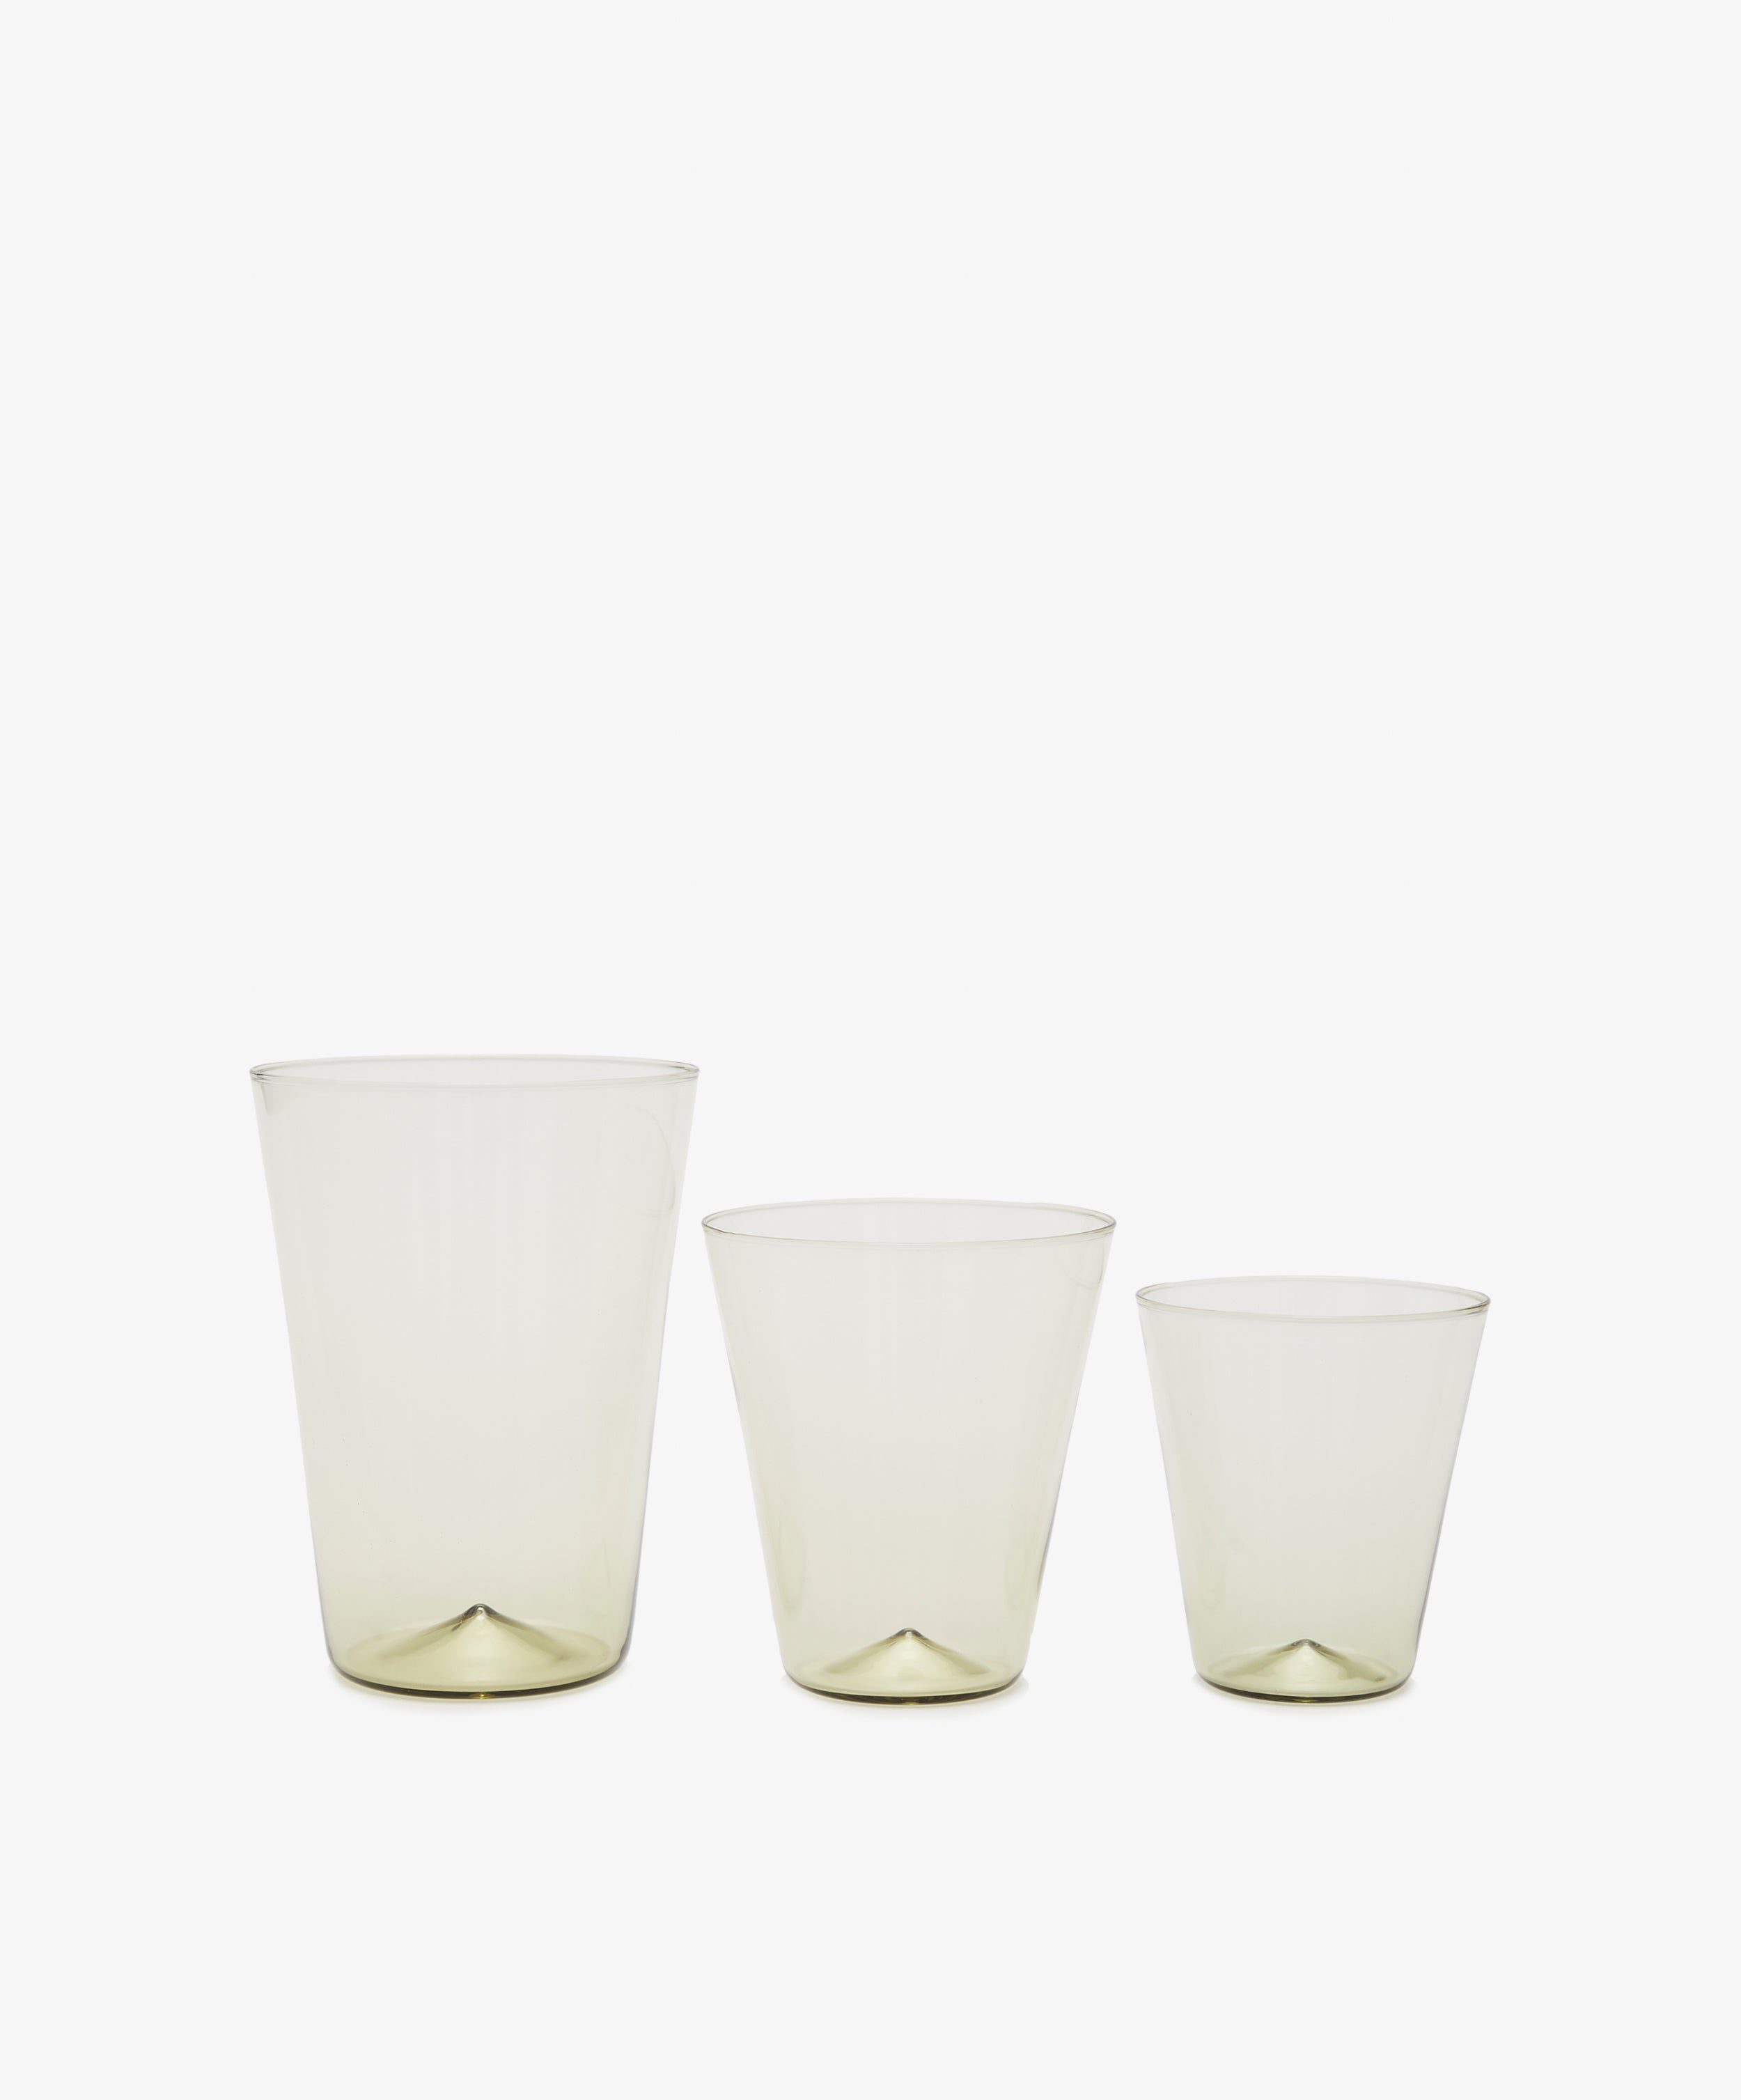 Marena White Wine Glass, Set of 2